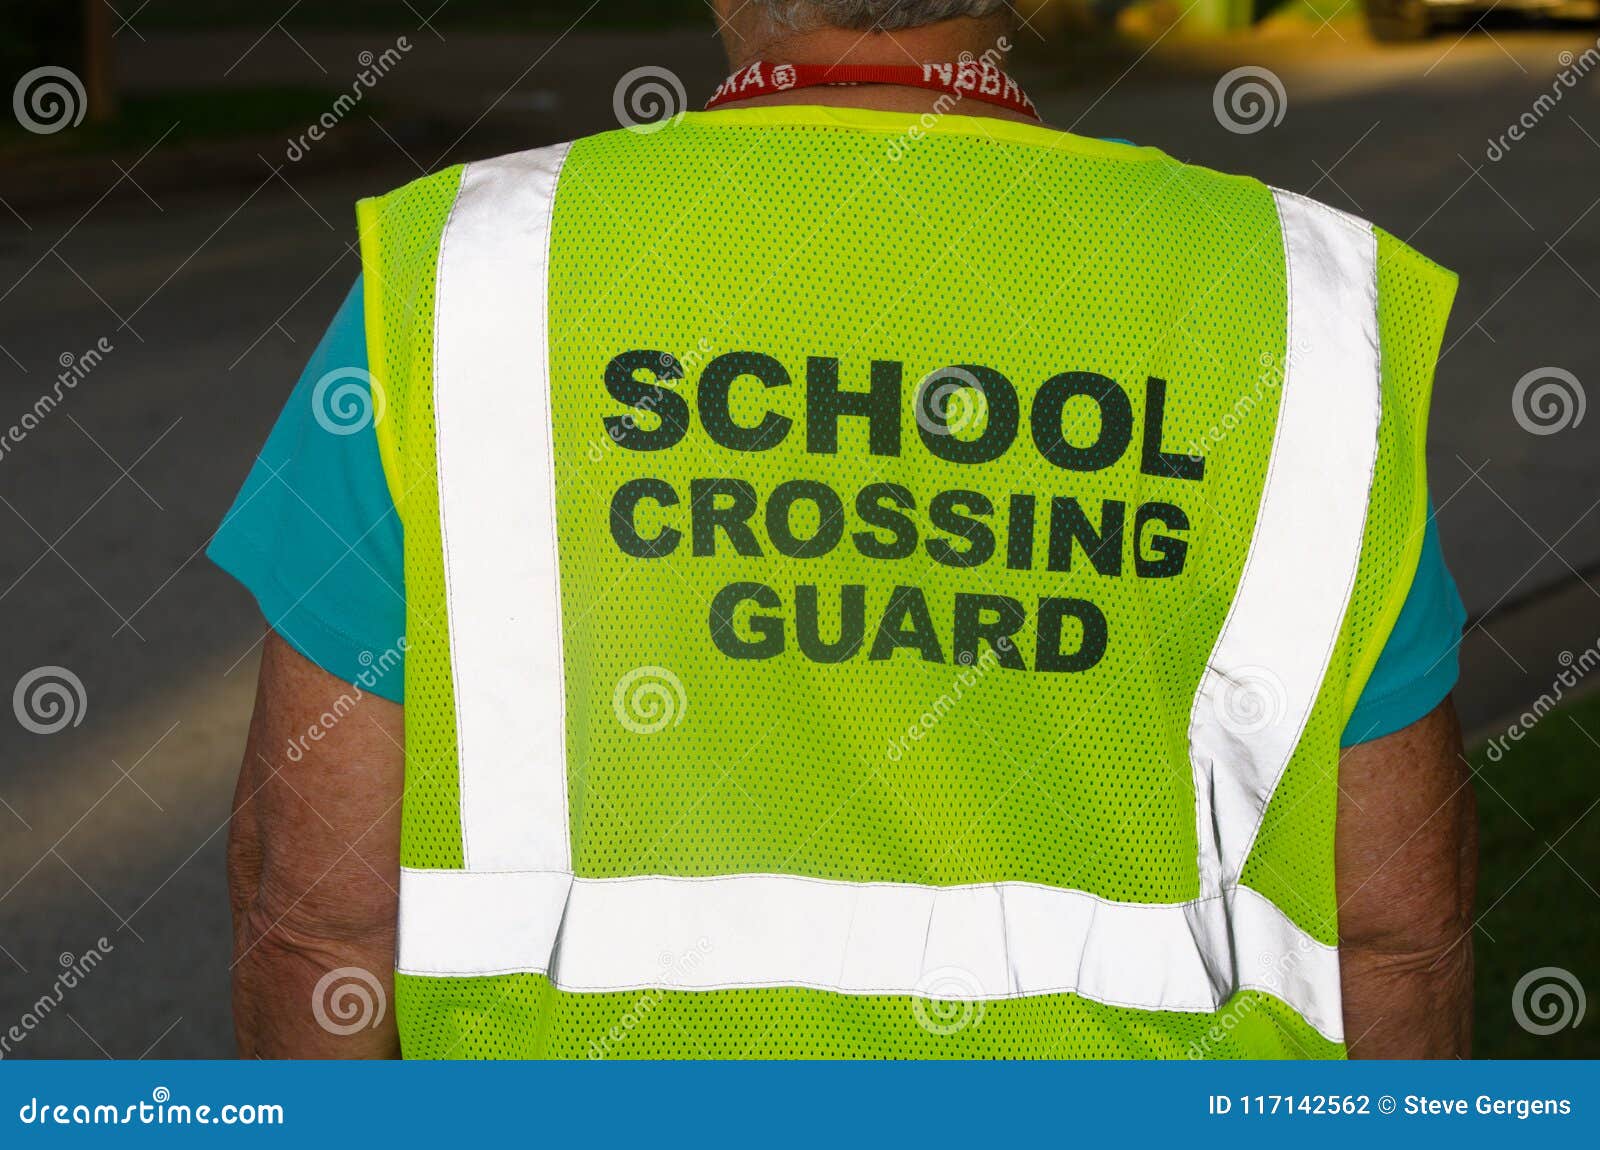 school crossing guard vest